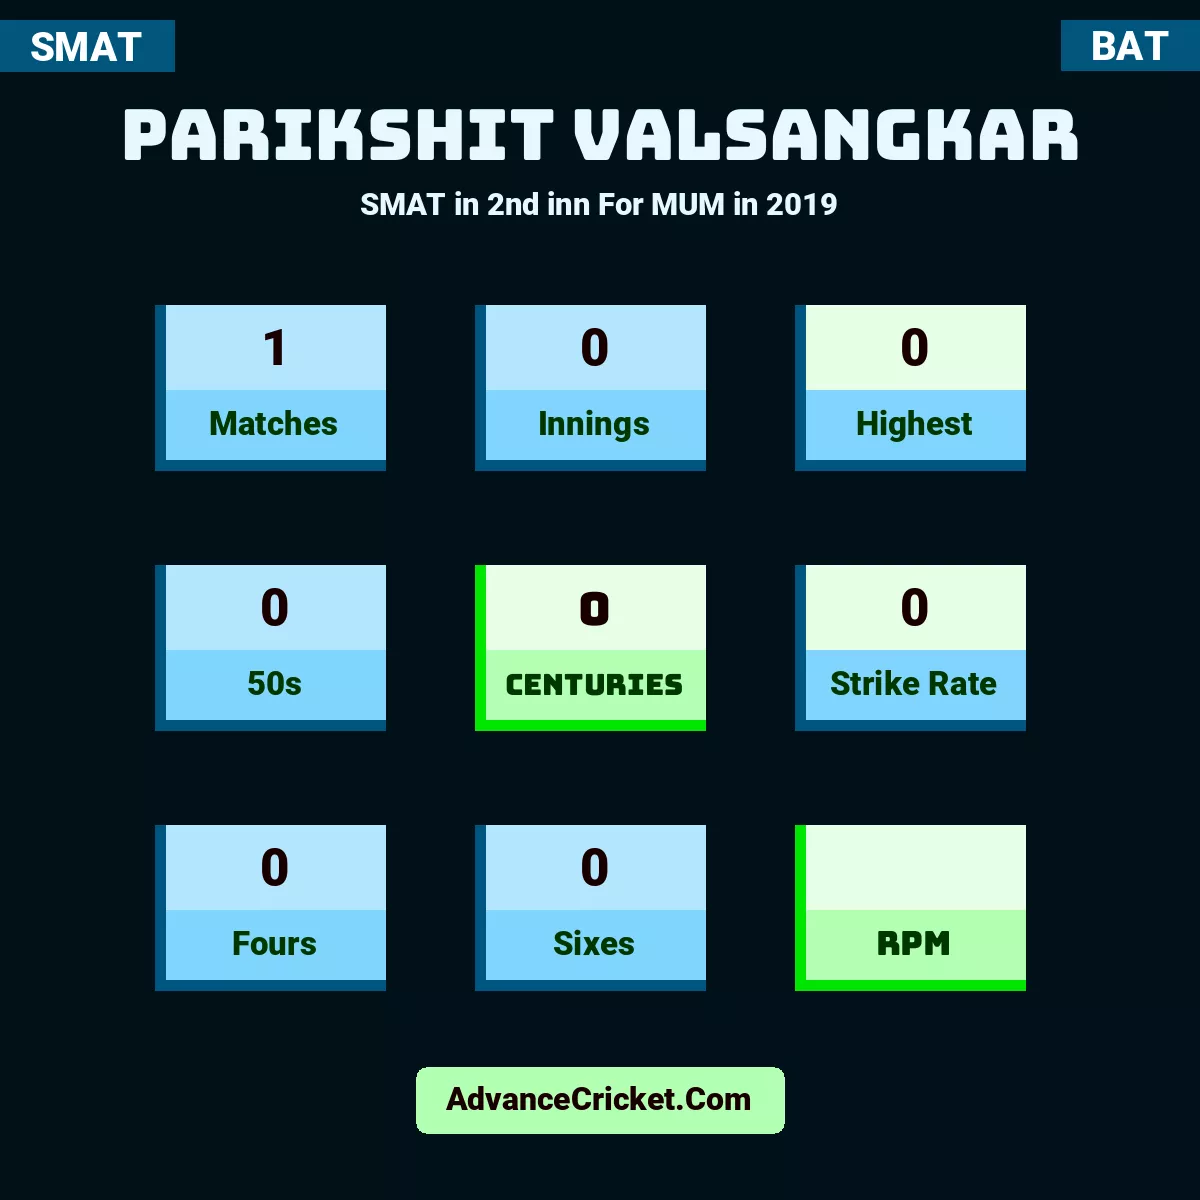 Parikshit Valsangkar SMAT  in 2nd inn For MUM in 2019, Parikshit Valsangkar played 1 matches, scored 0 runs as highest, 0 half-centuries, and 0 centuries, with a strike rate of 0. P.Valsangkar hit 0 fours and 0 sixes.